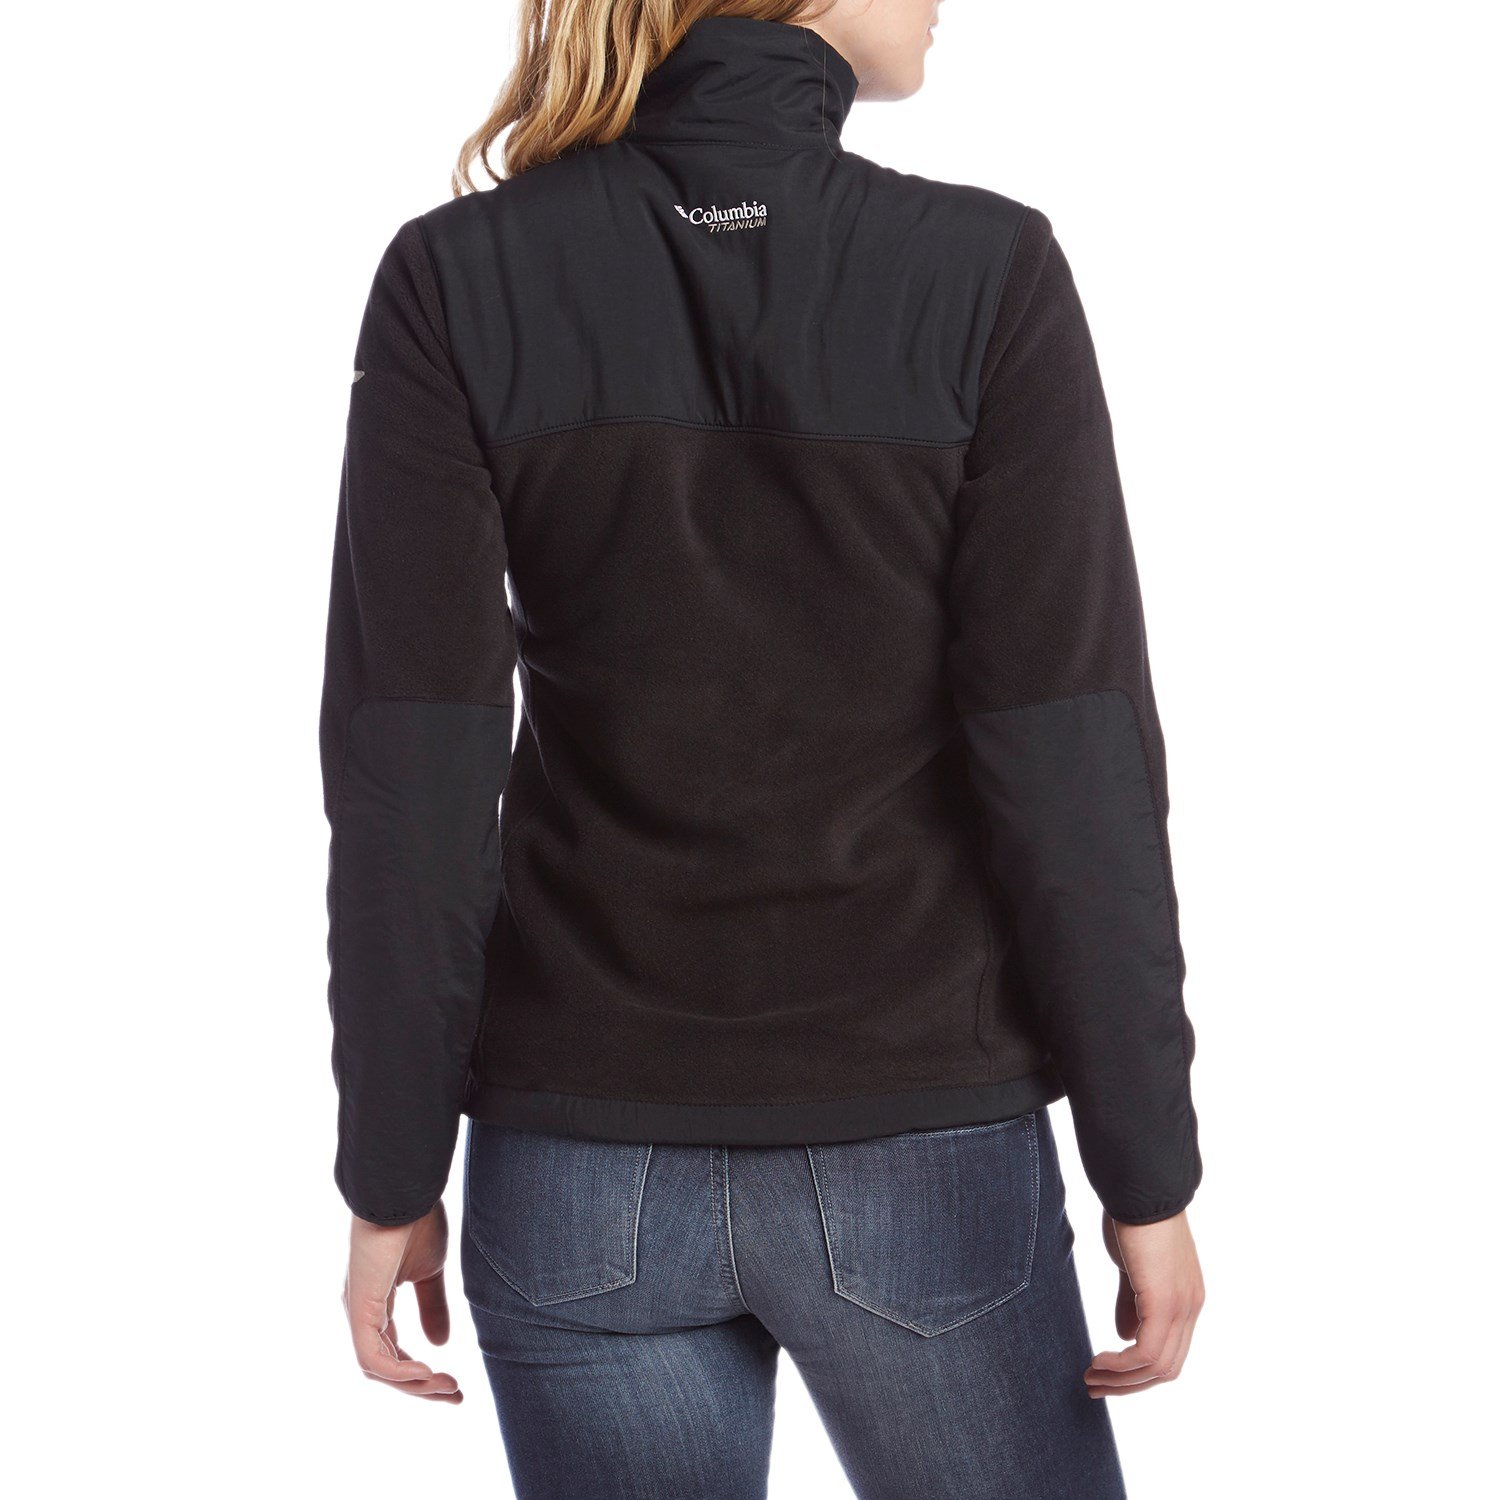 black columbia fleece jacket women's